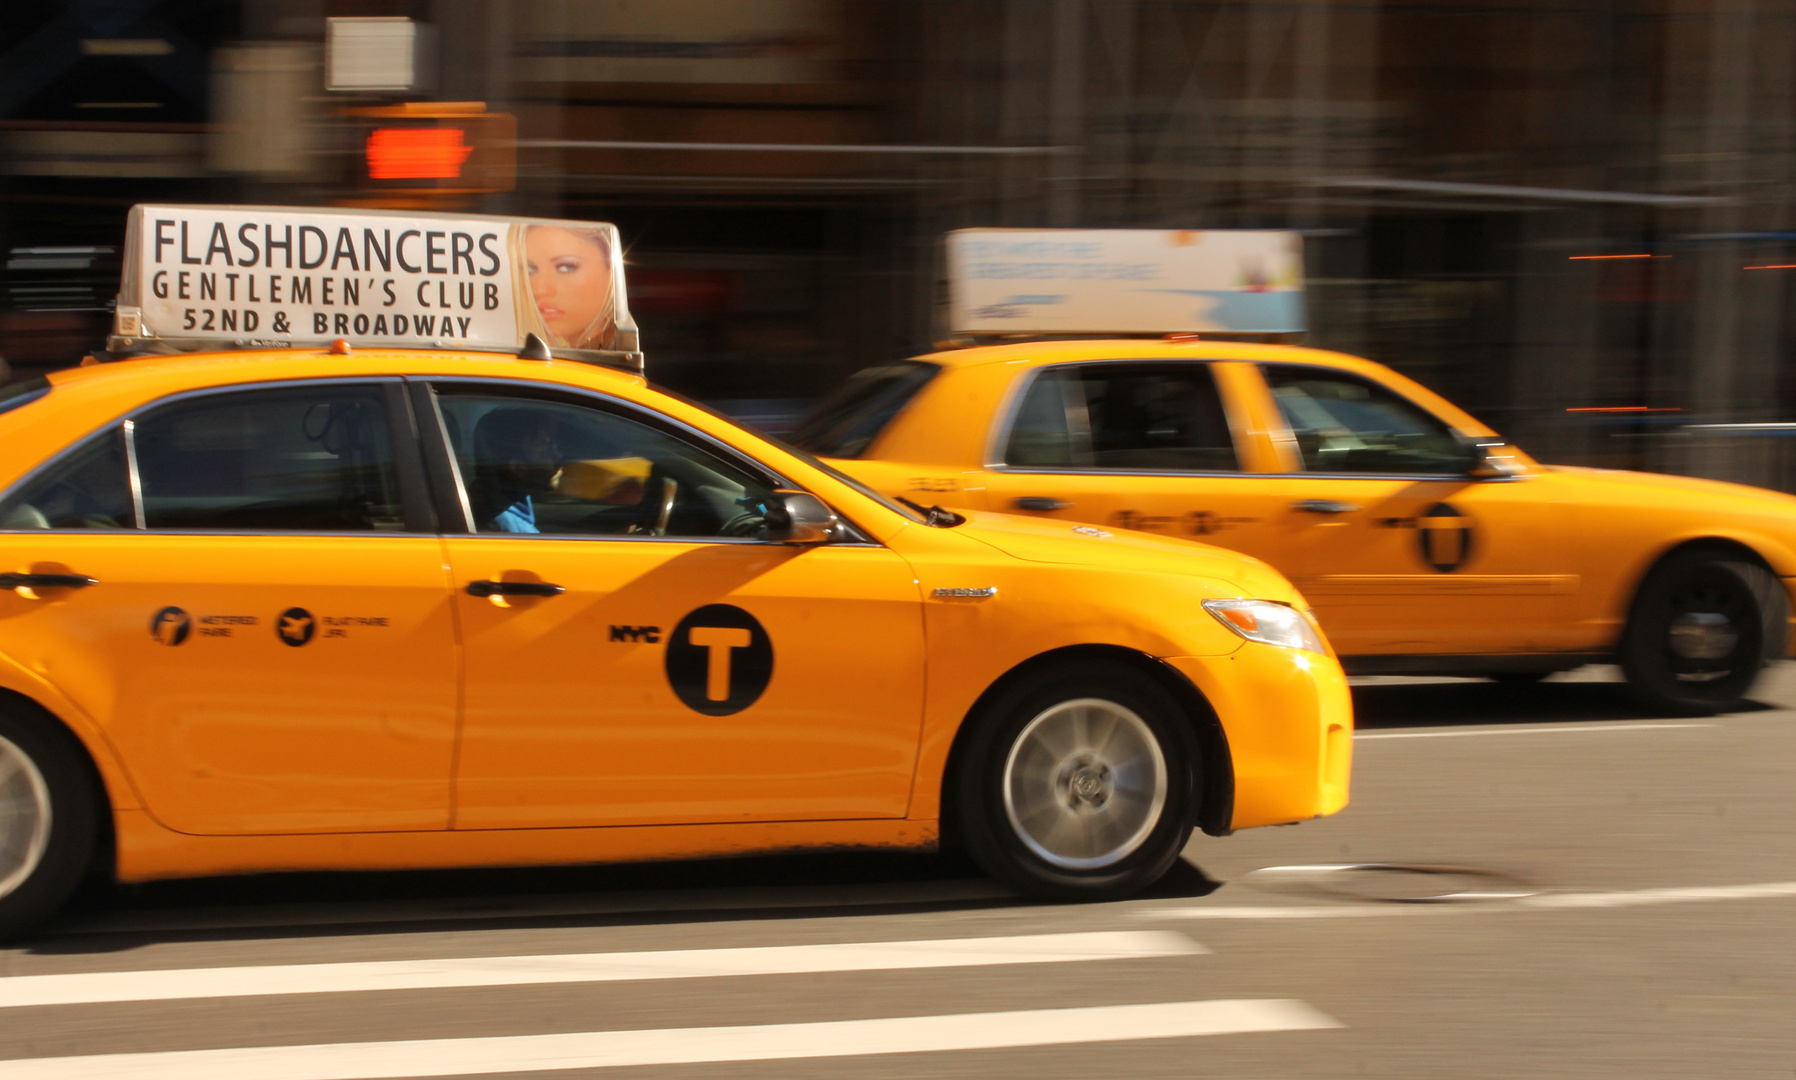 Taxi - New York